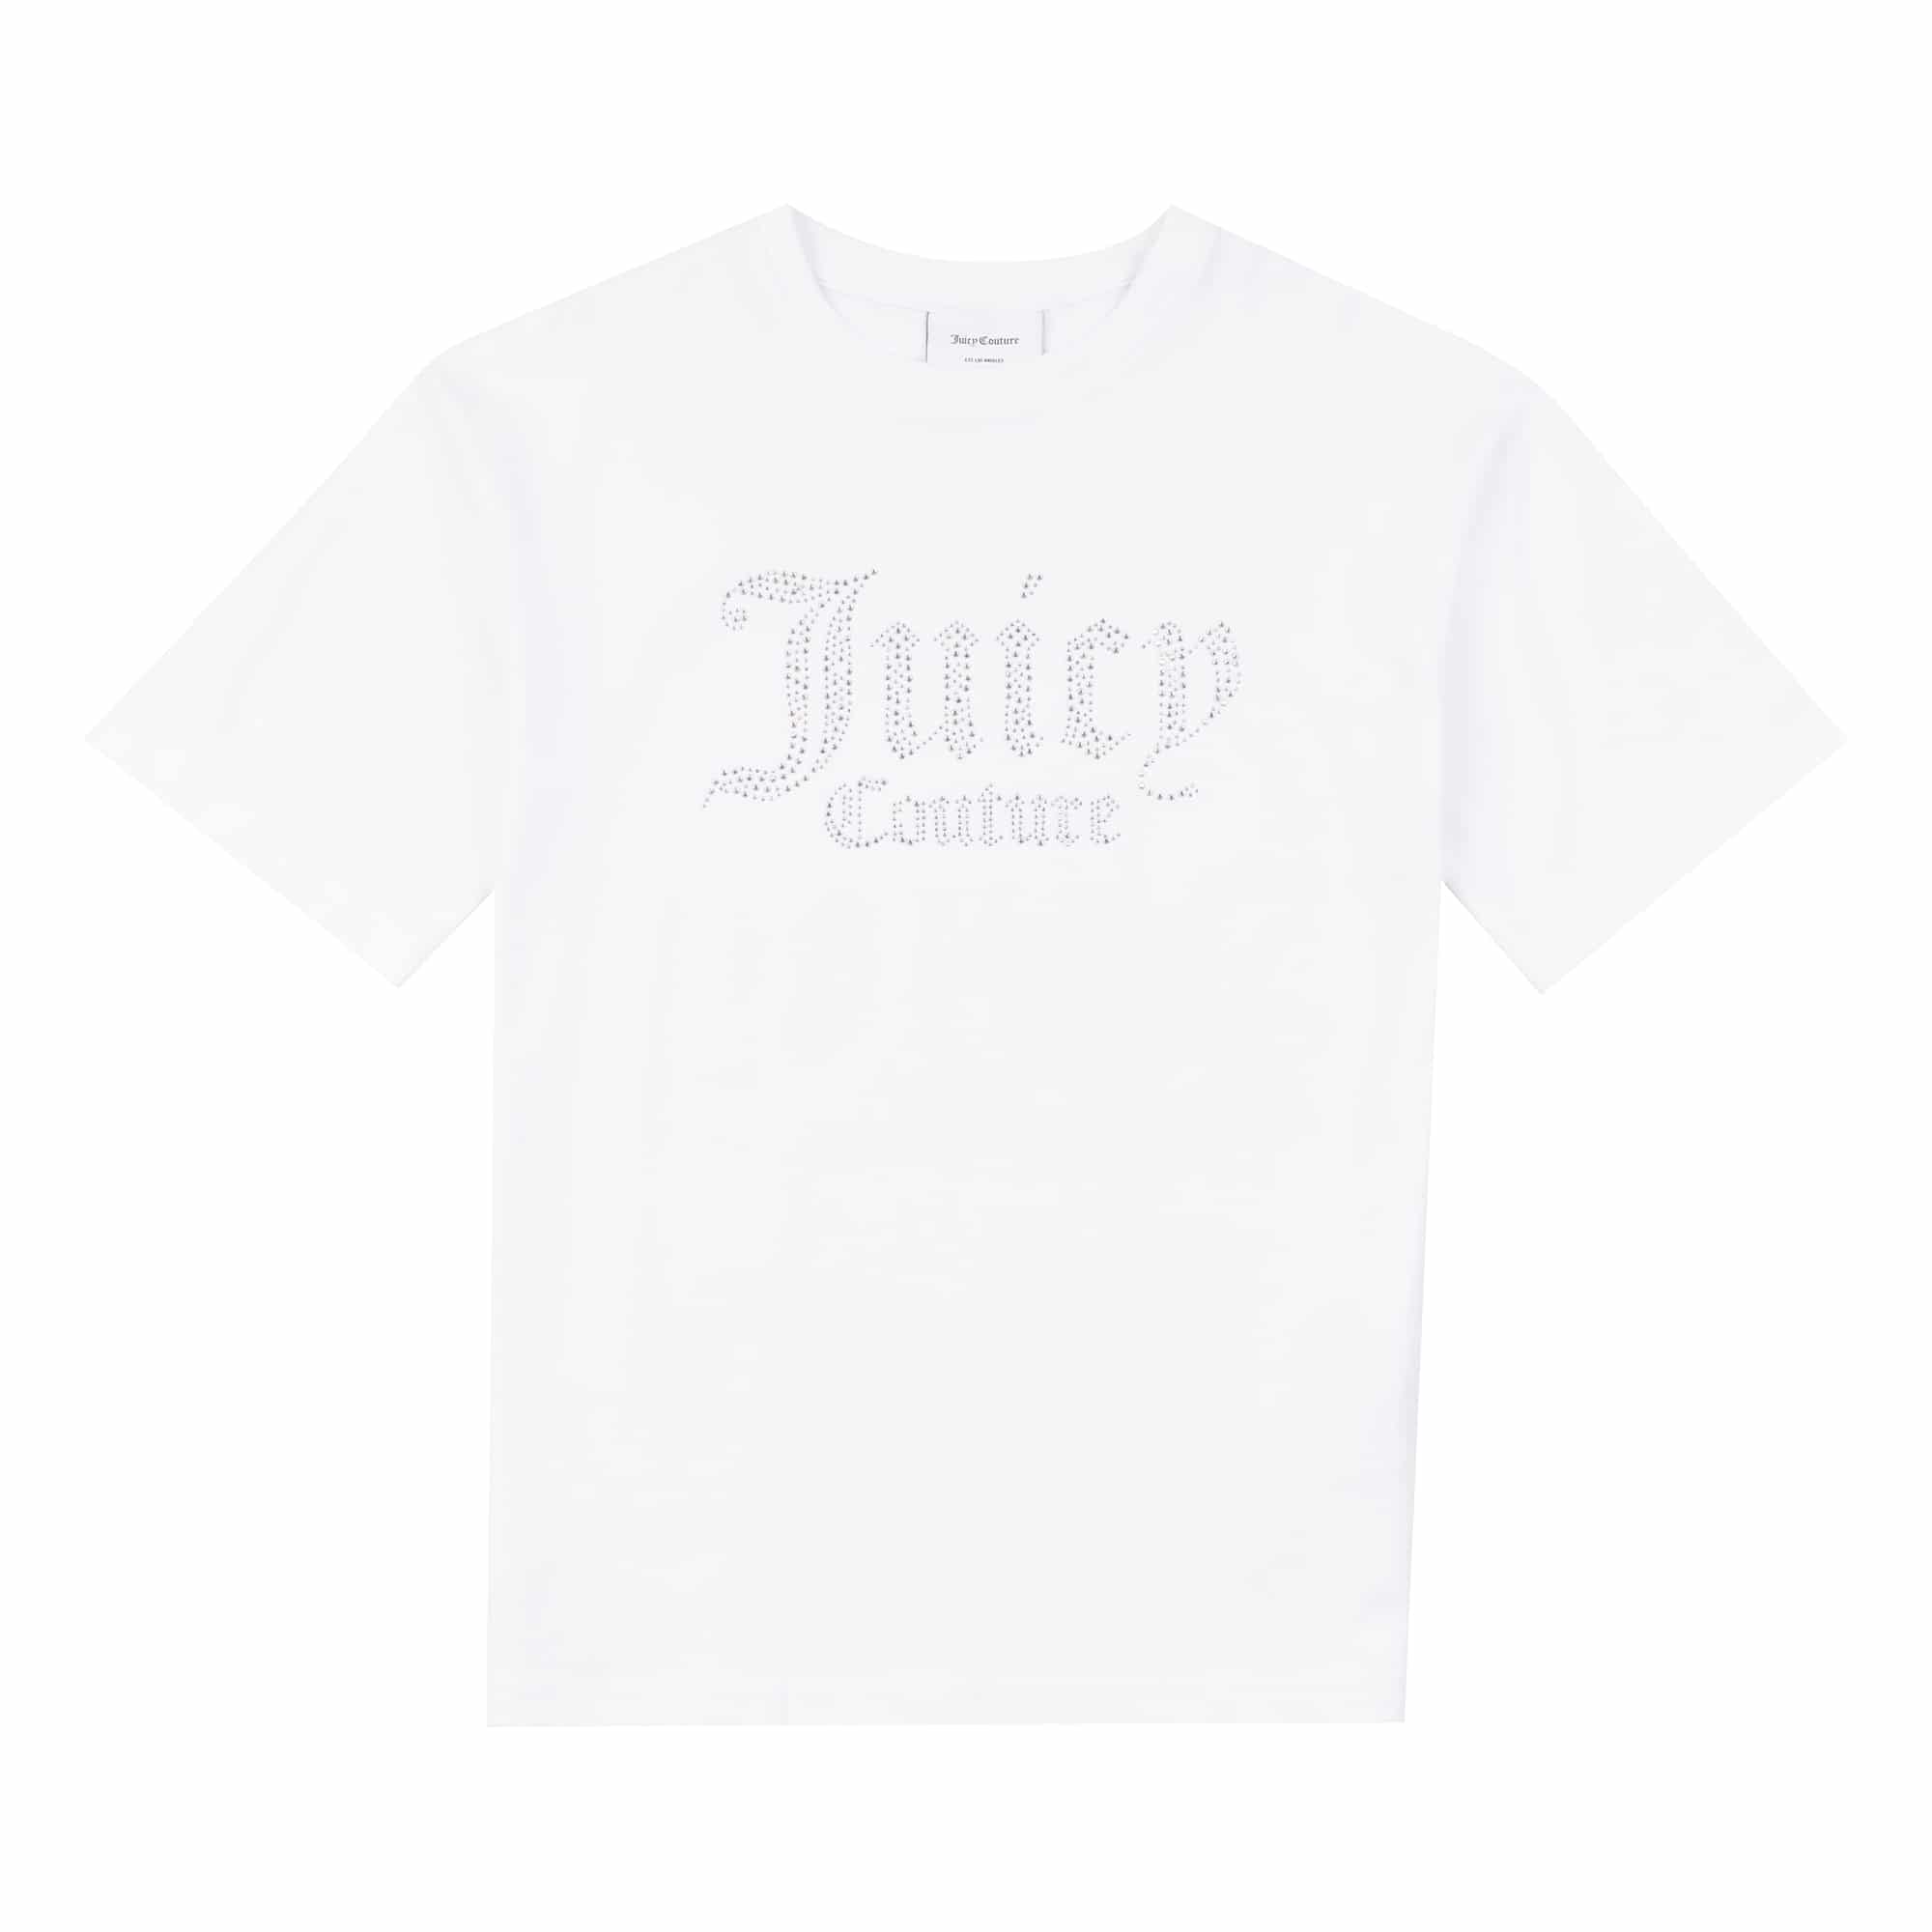 Juicy Couture diamante logo white tshirt front view